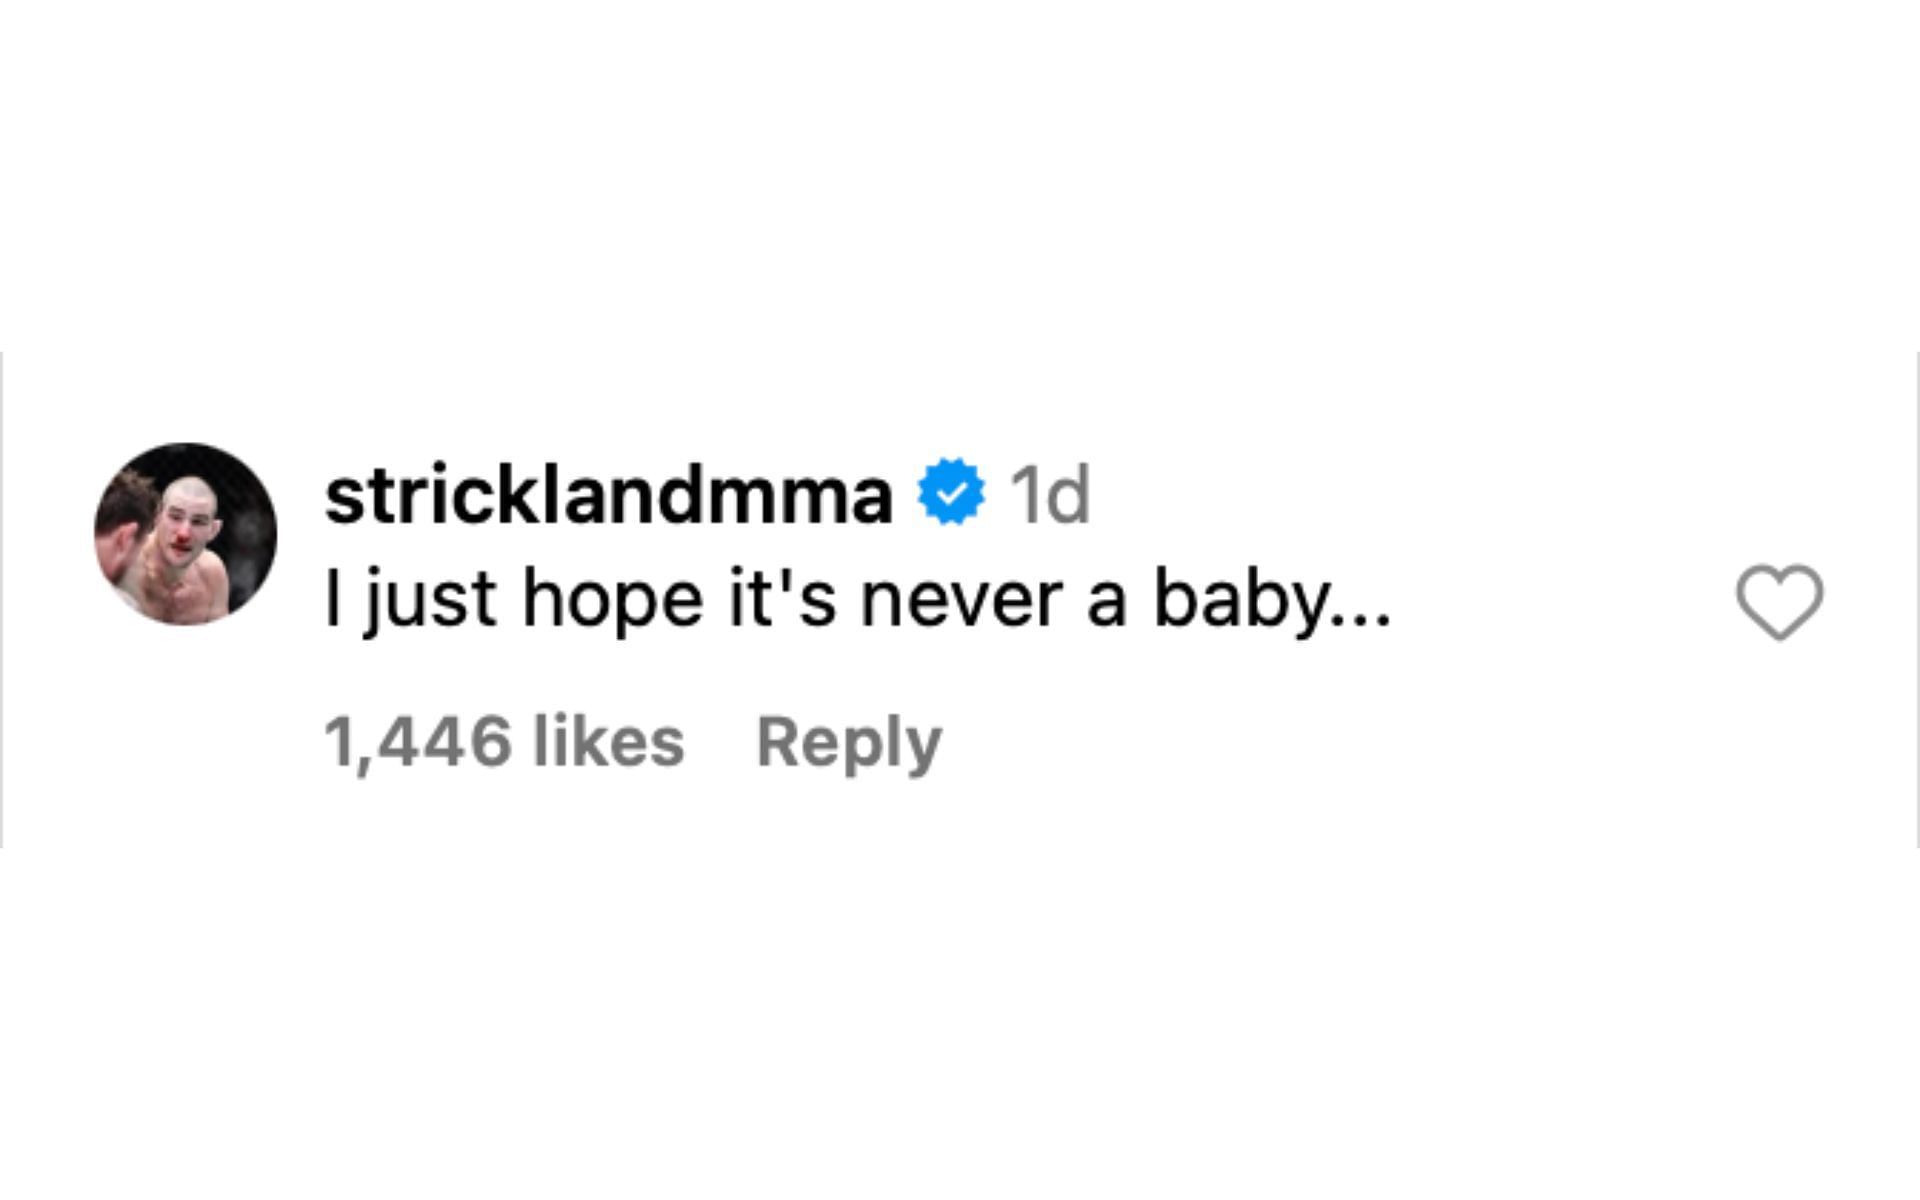 Sean Strickland responding to Nina-Marie Daniele on Instagram [via @ninamariedaniele on Instagram]